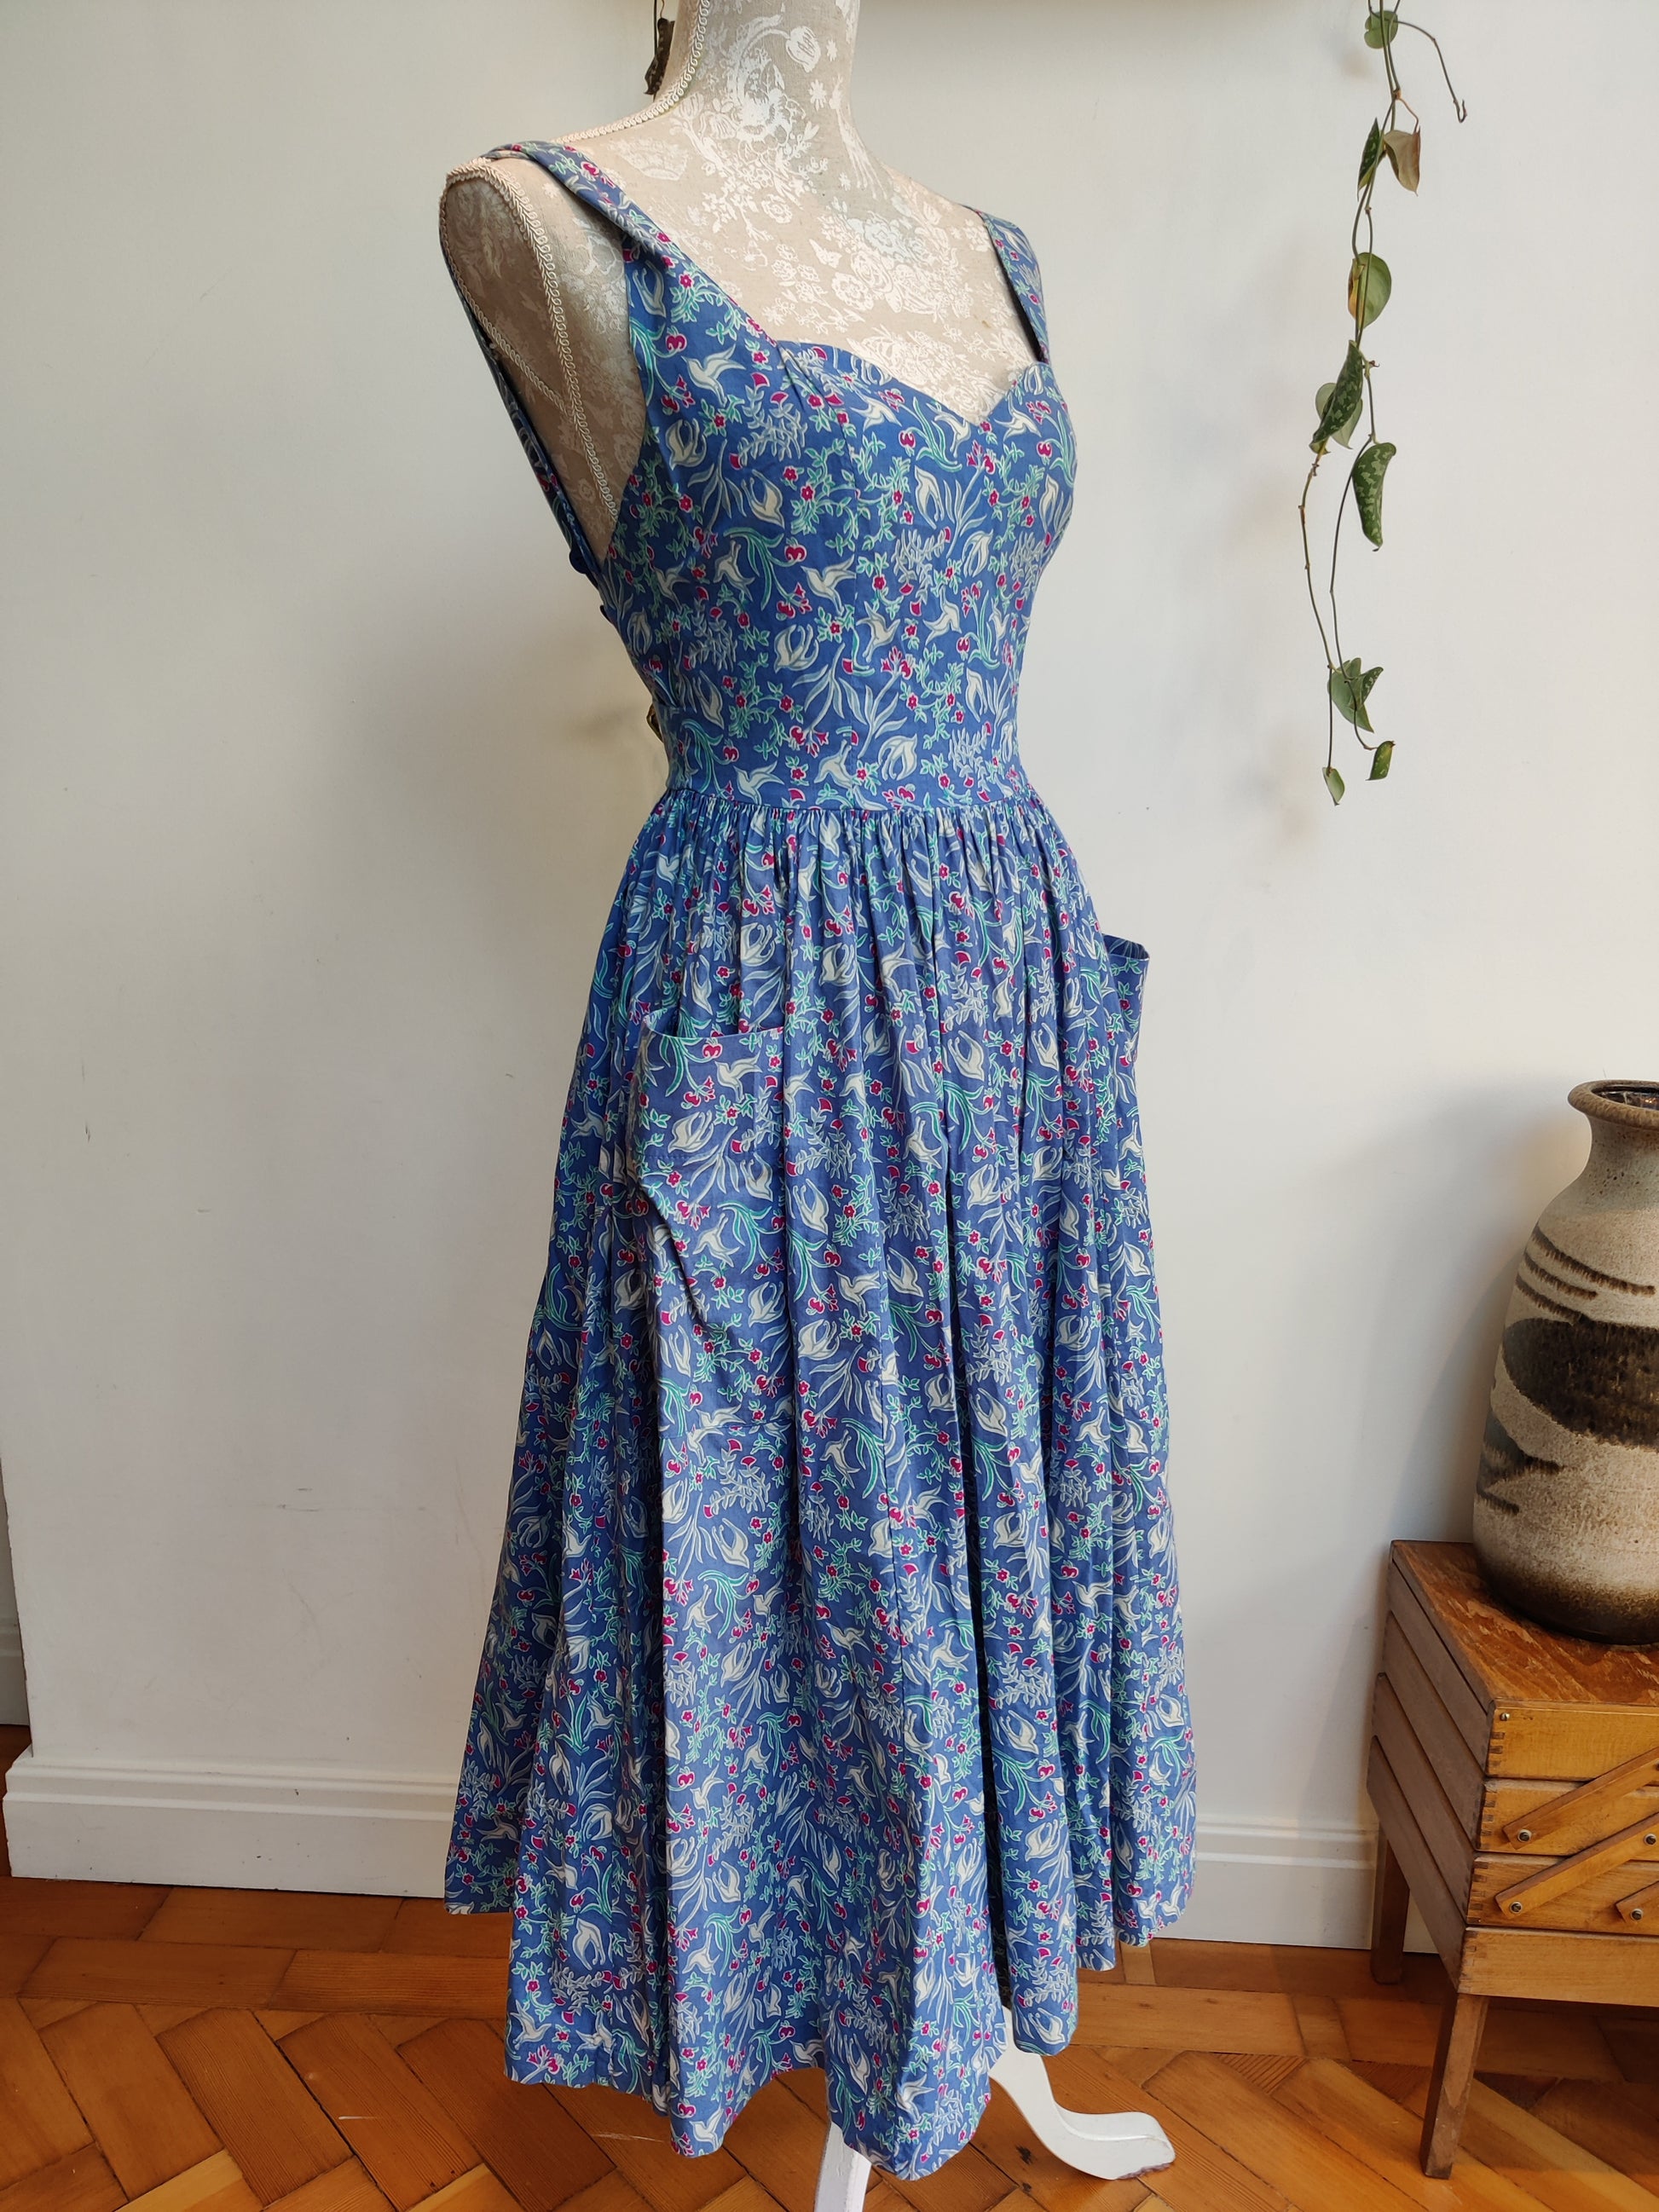 Blue and white Laura Ashley vintage dress size 8